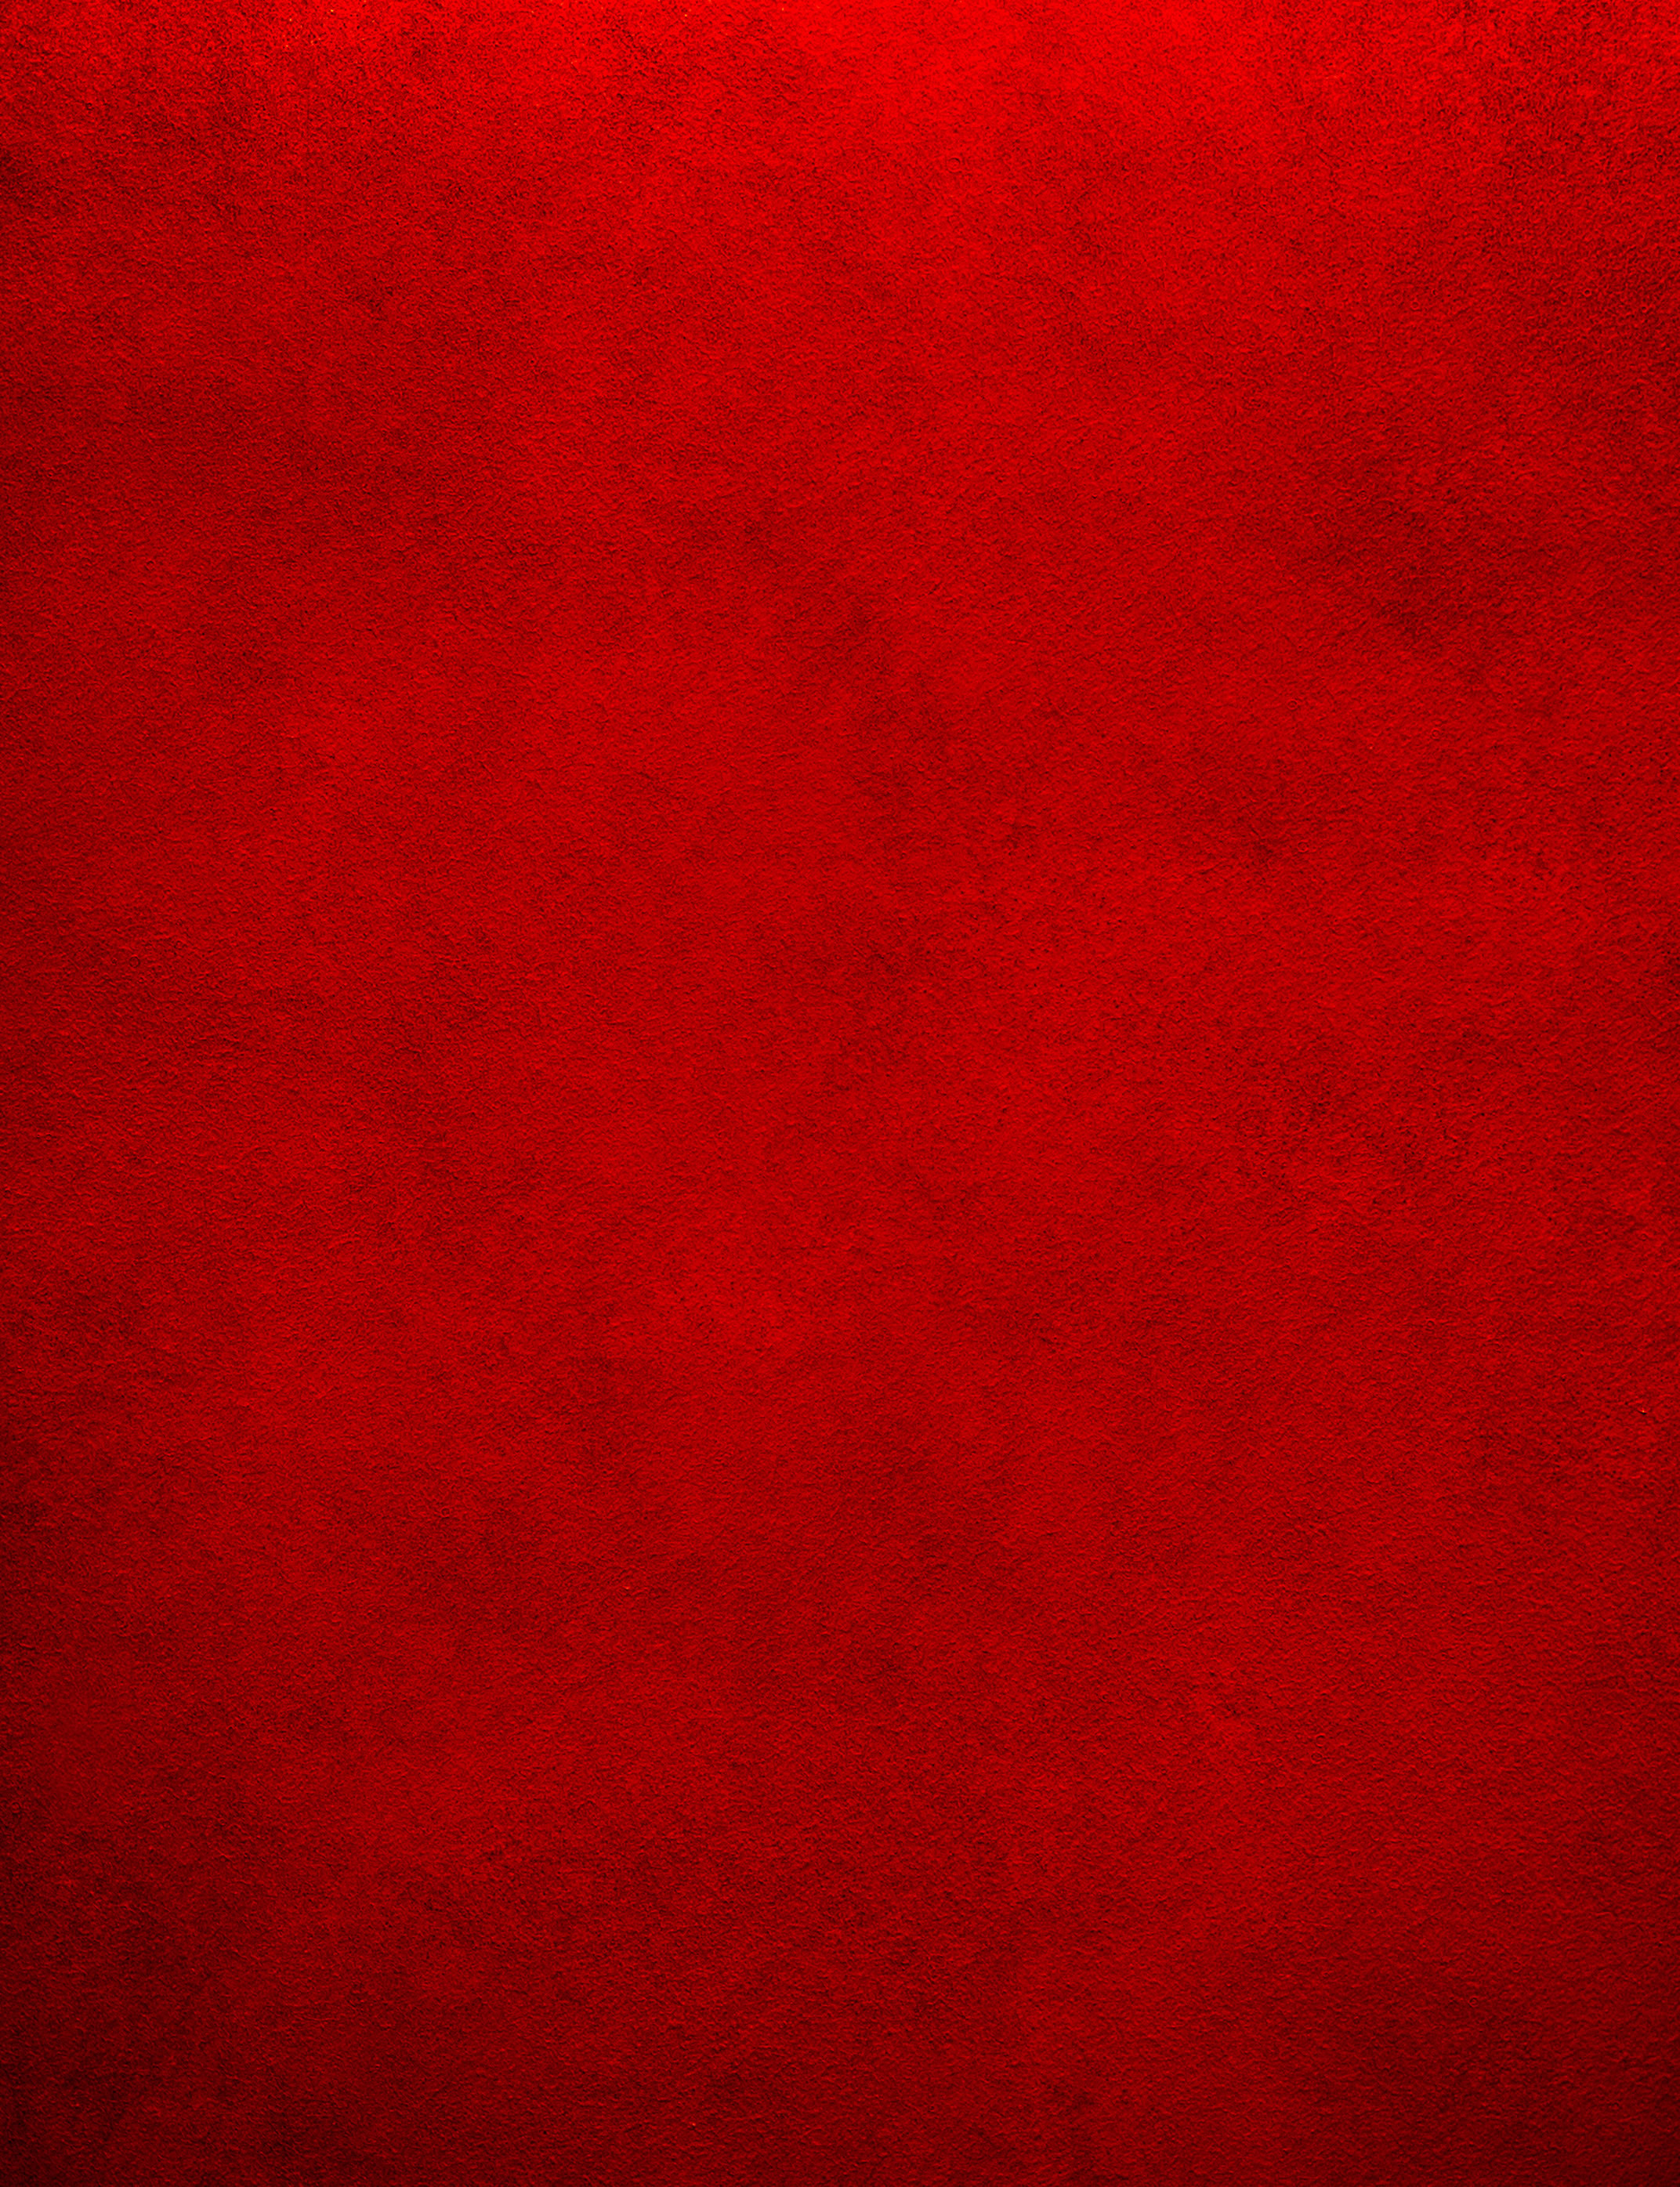 красная краска, текстура краски, фон, скачать фото, red color paint texture background